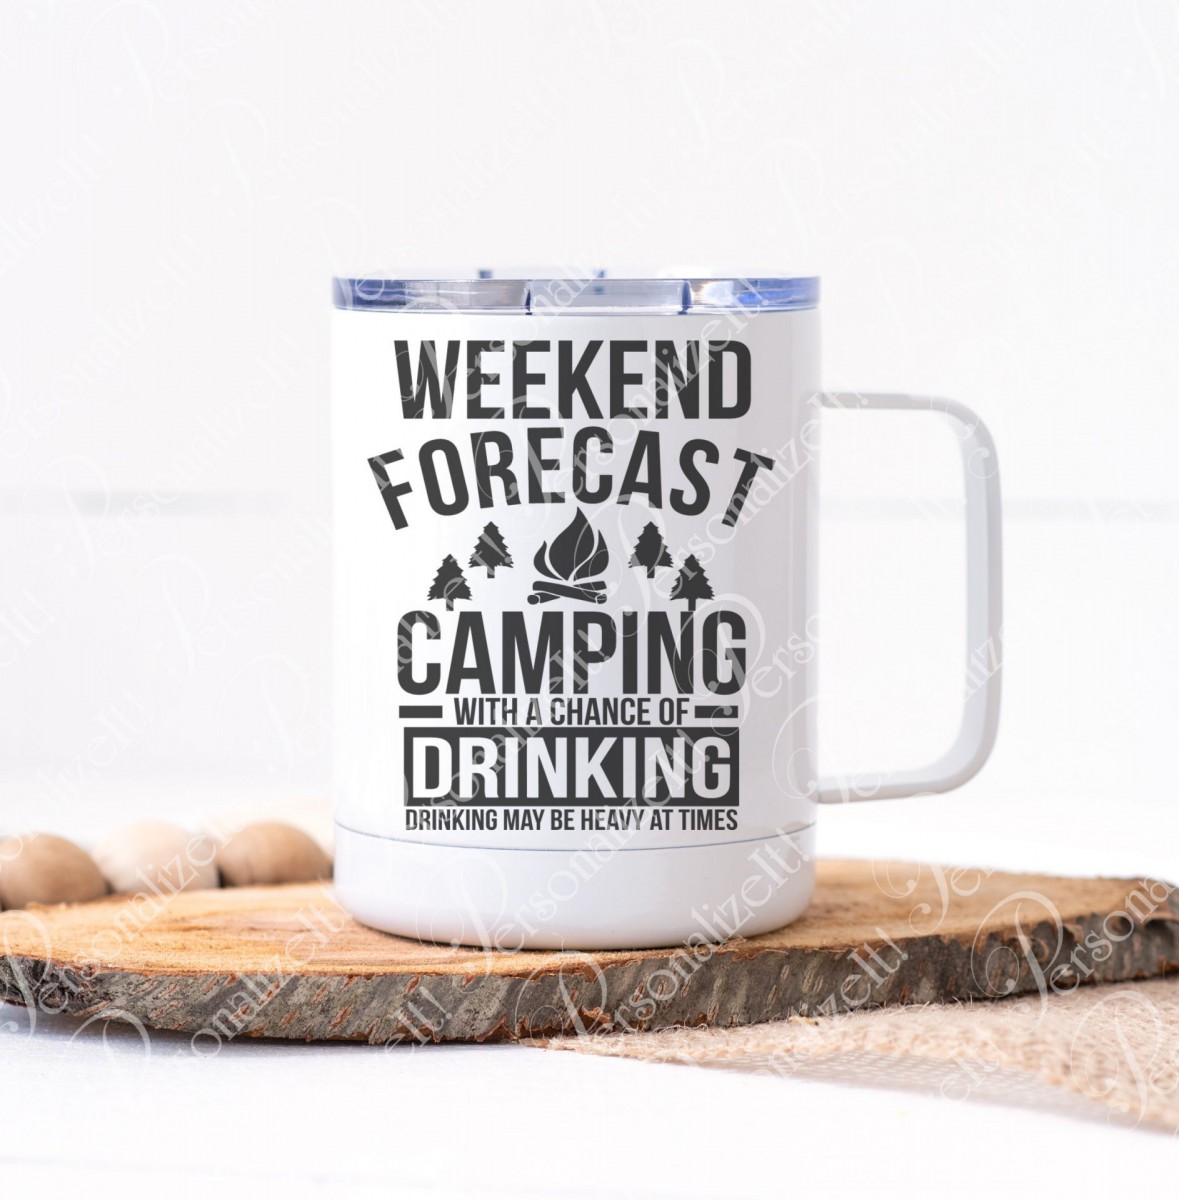 https://personalizeitforyou.com/wp-content/uploads/2019/11/Weekend-Forecast-tall-camp-mug-1179x1200.jpg